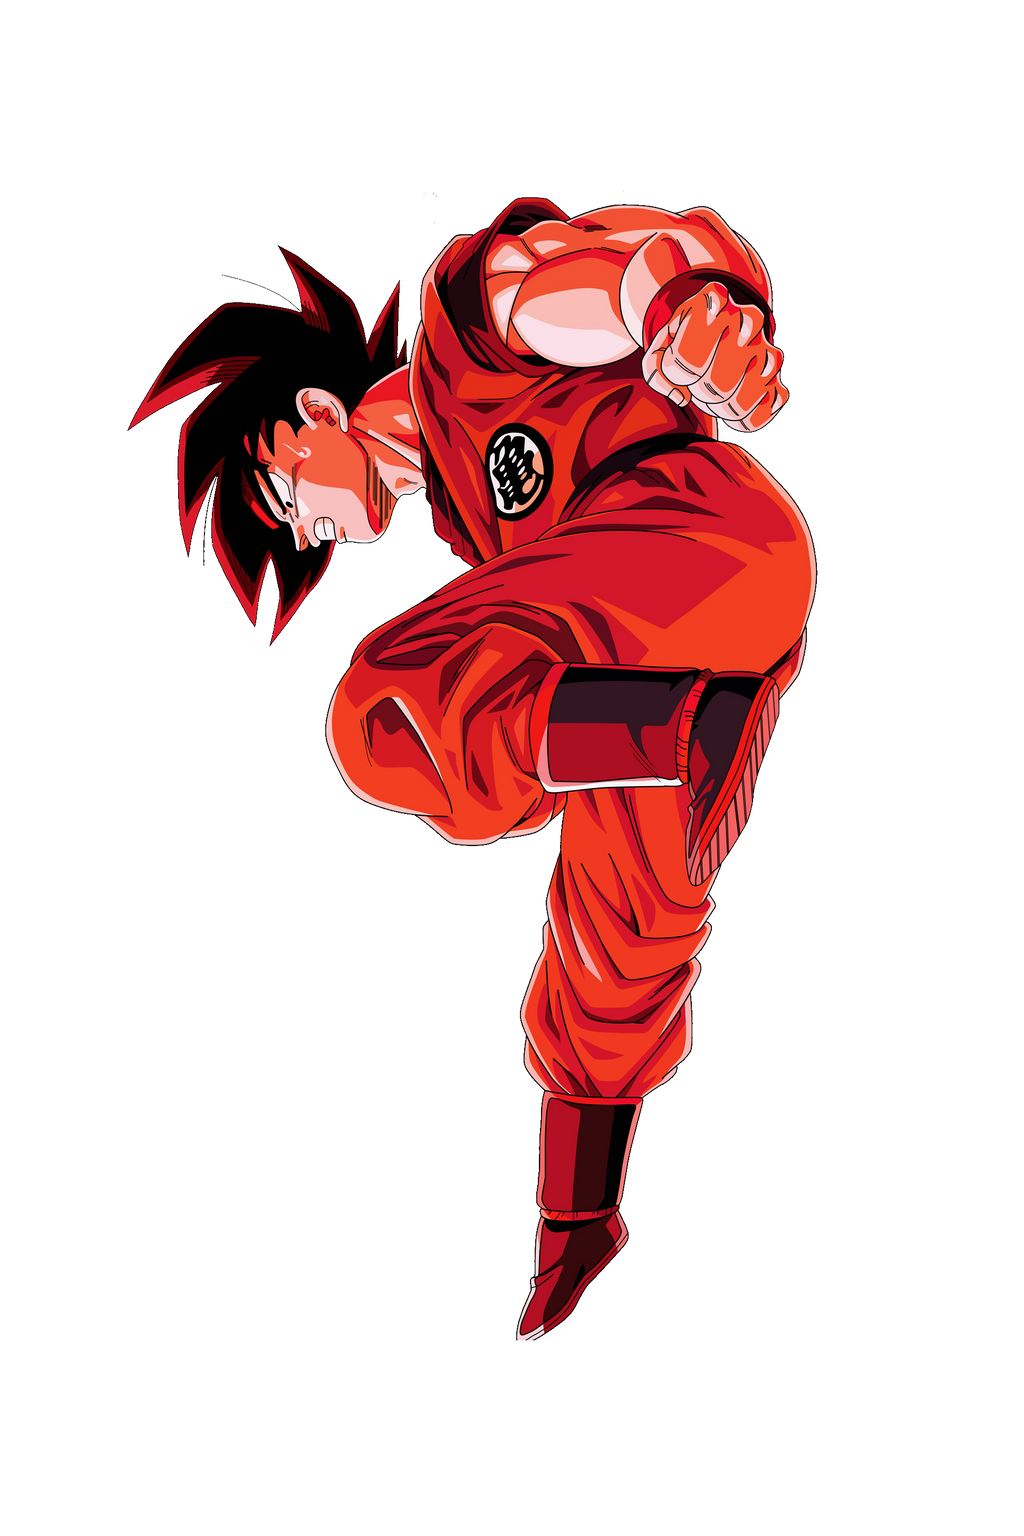 Dragon Ball Z Goku Kaio Ken X2 by diogouchiha on DeviantArt